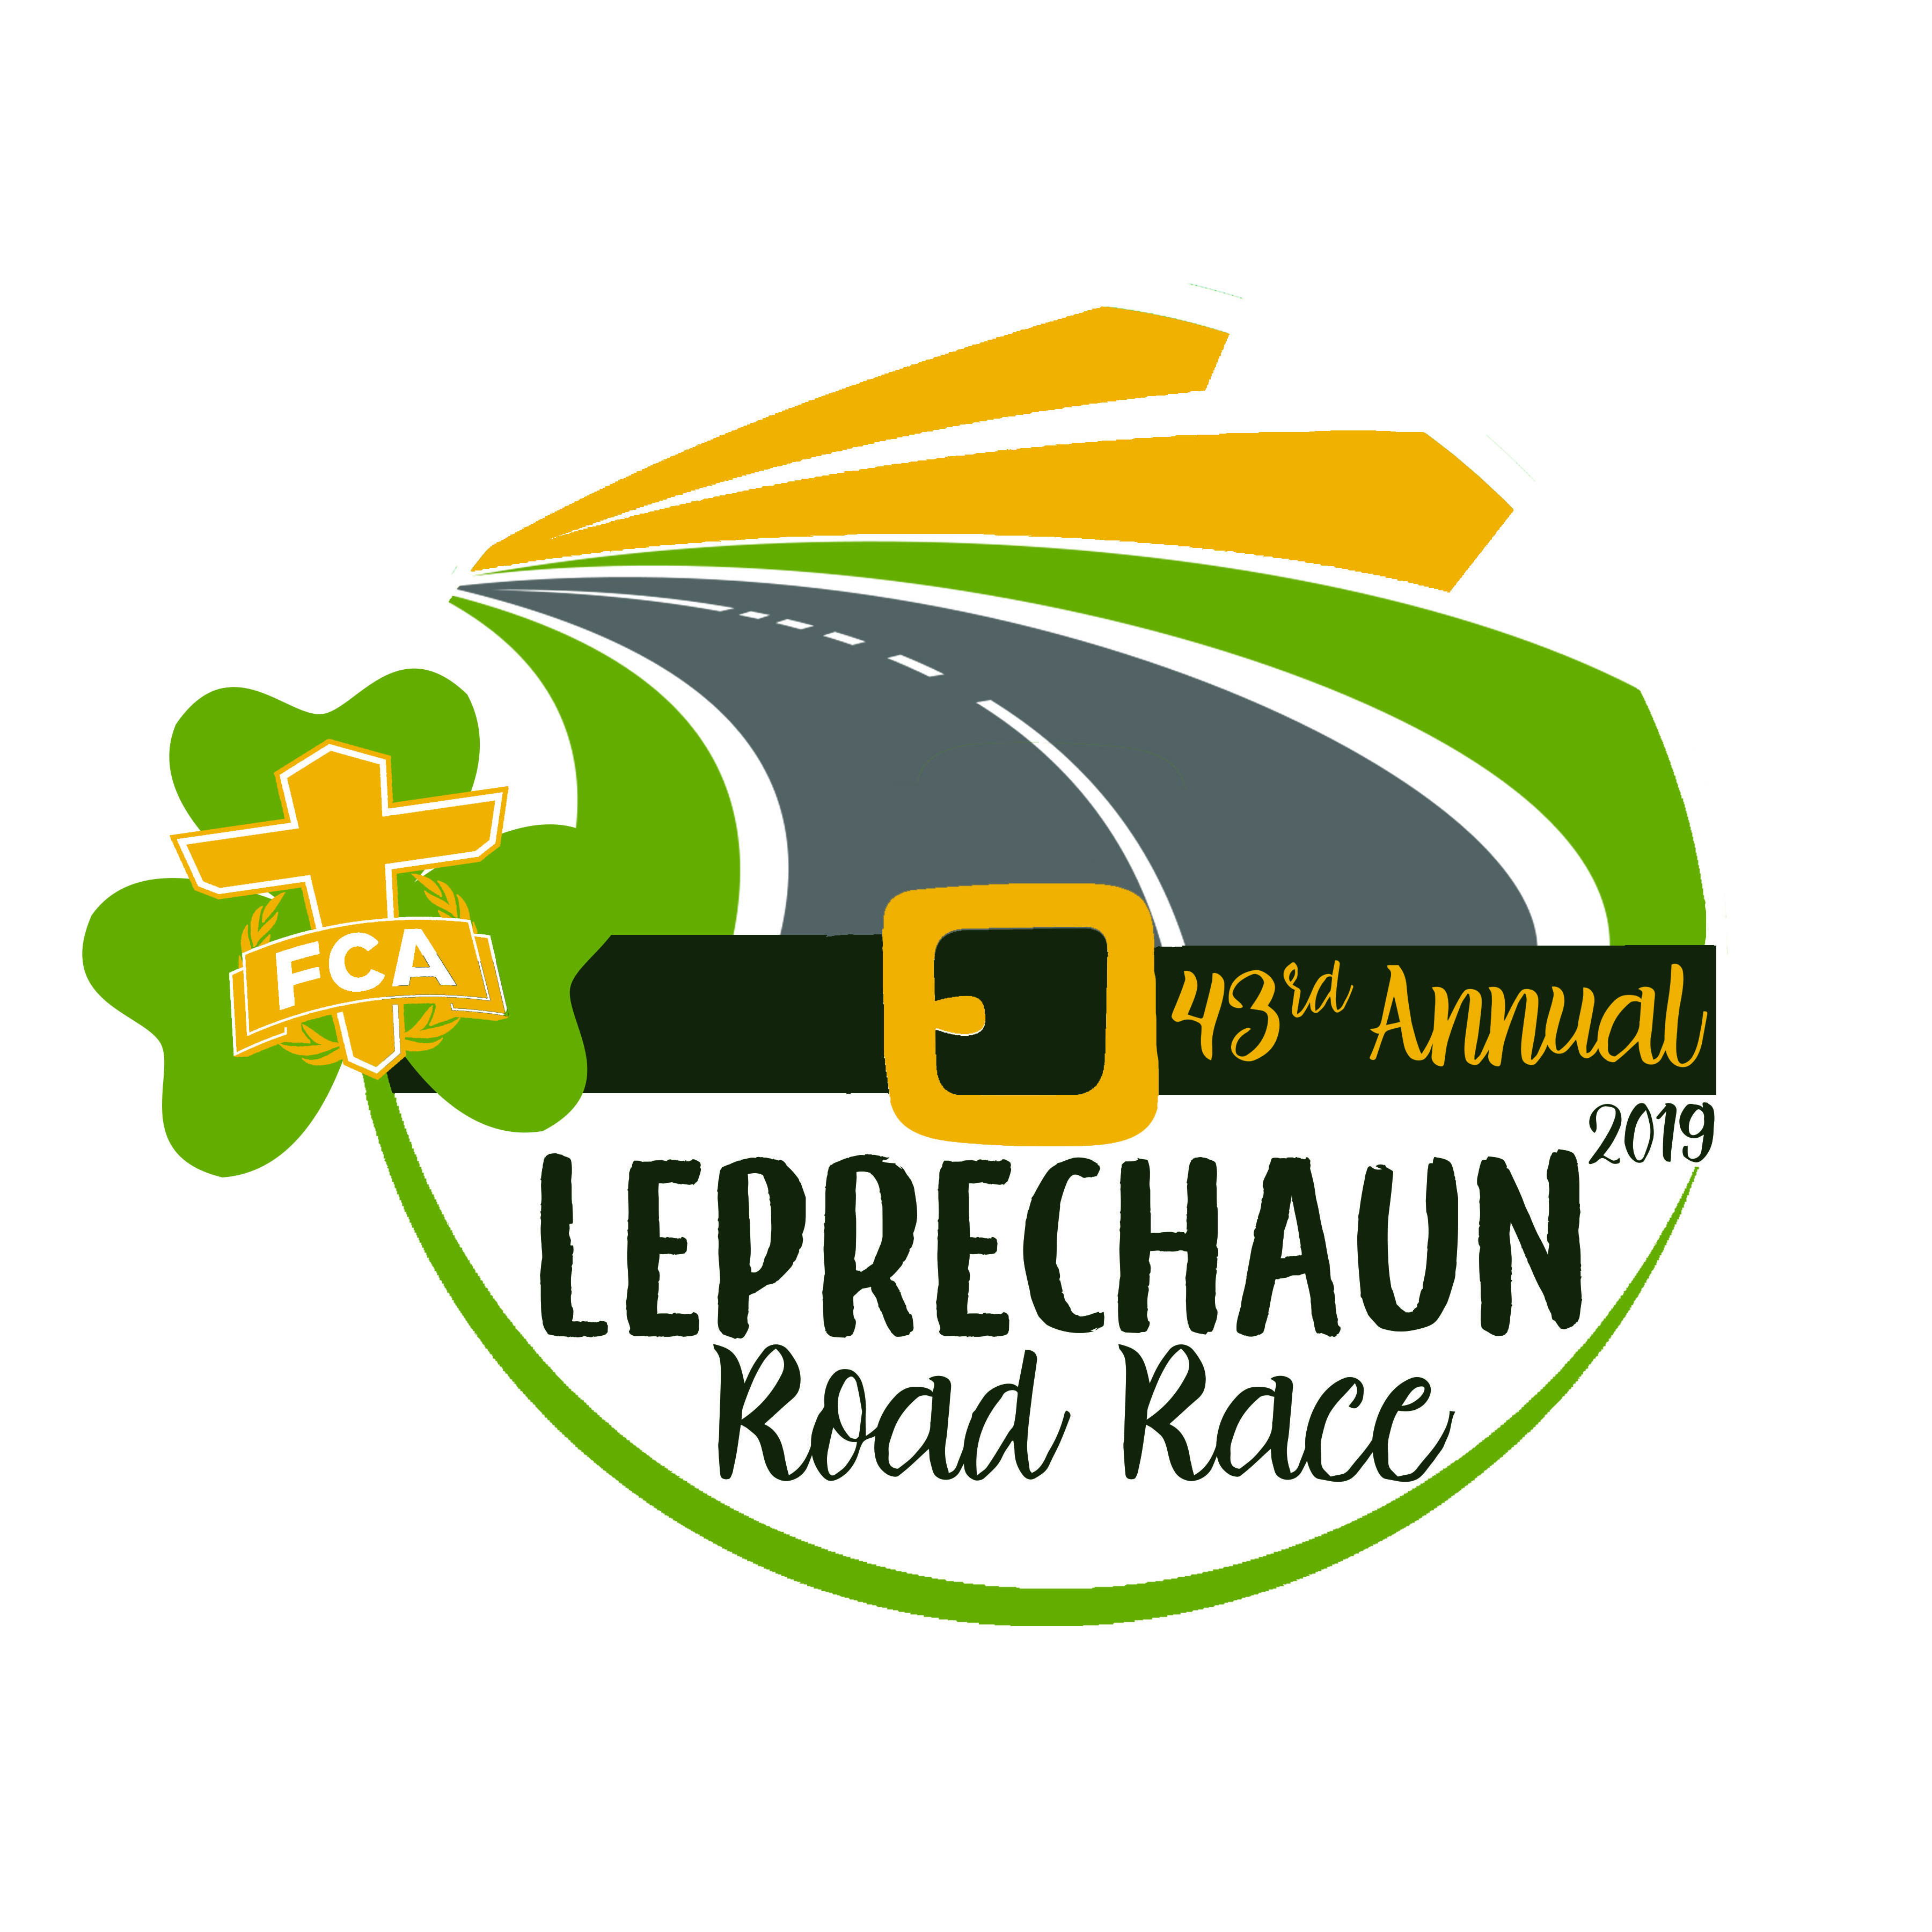 42nd Leprechaun Road Race - 5K, 10K, 1-mile